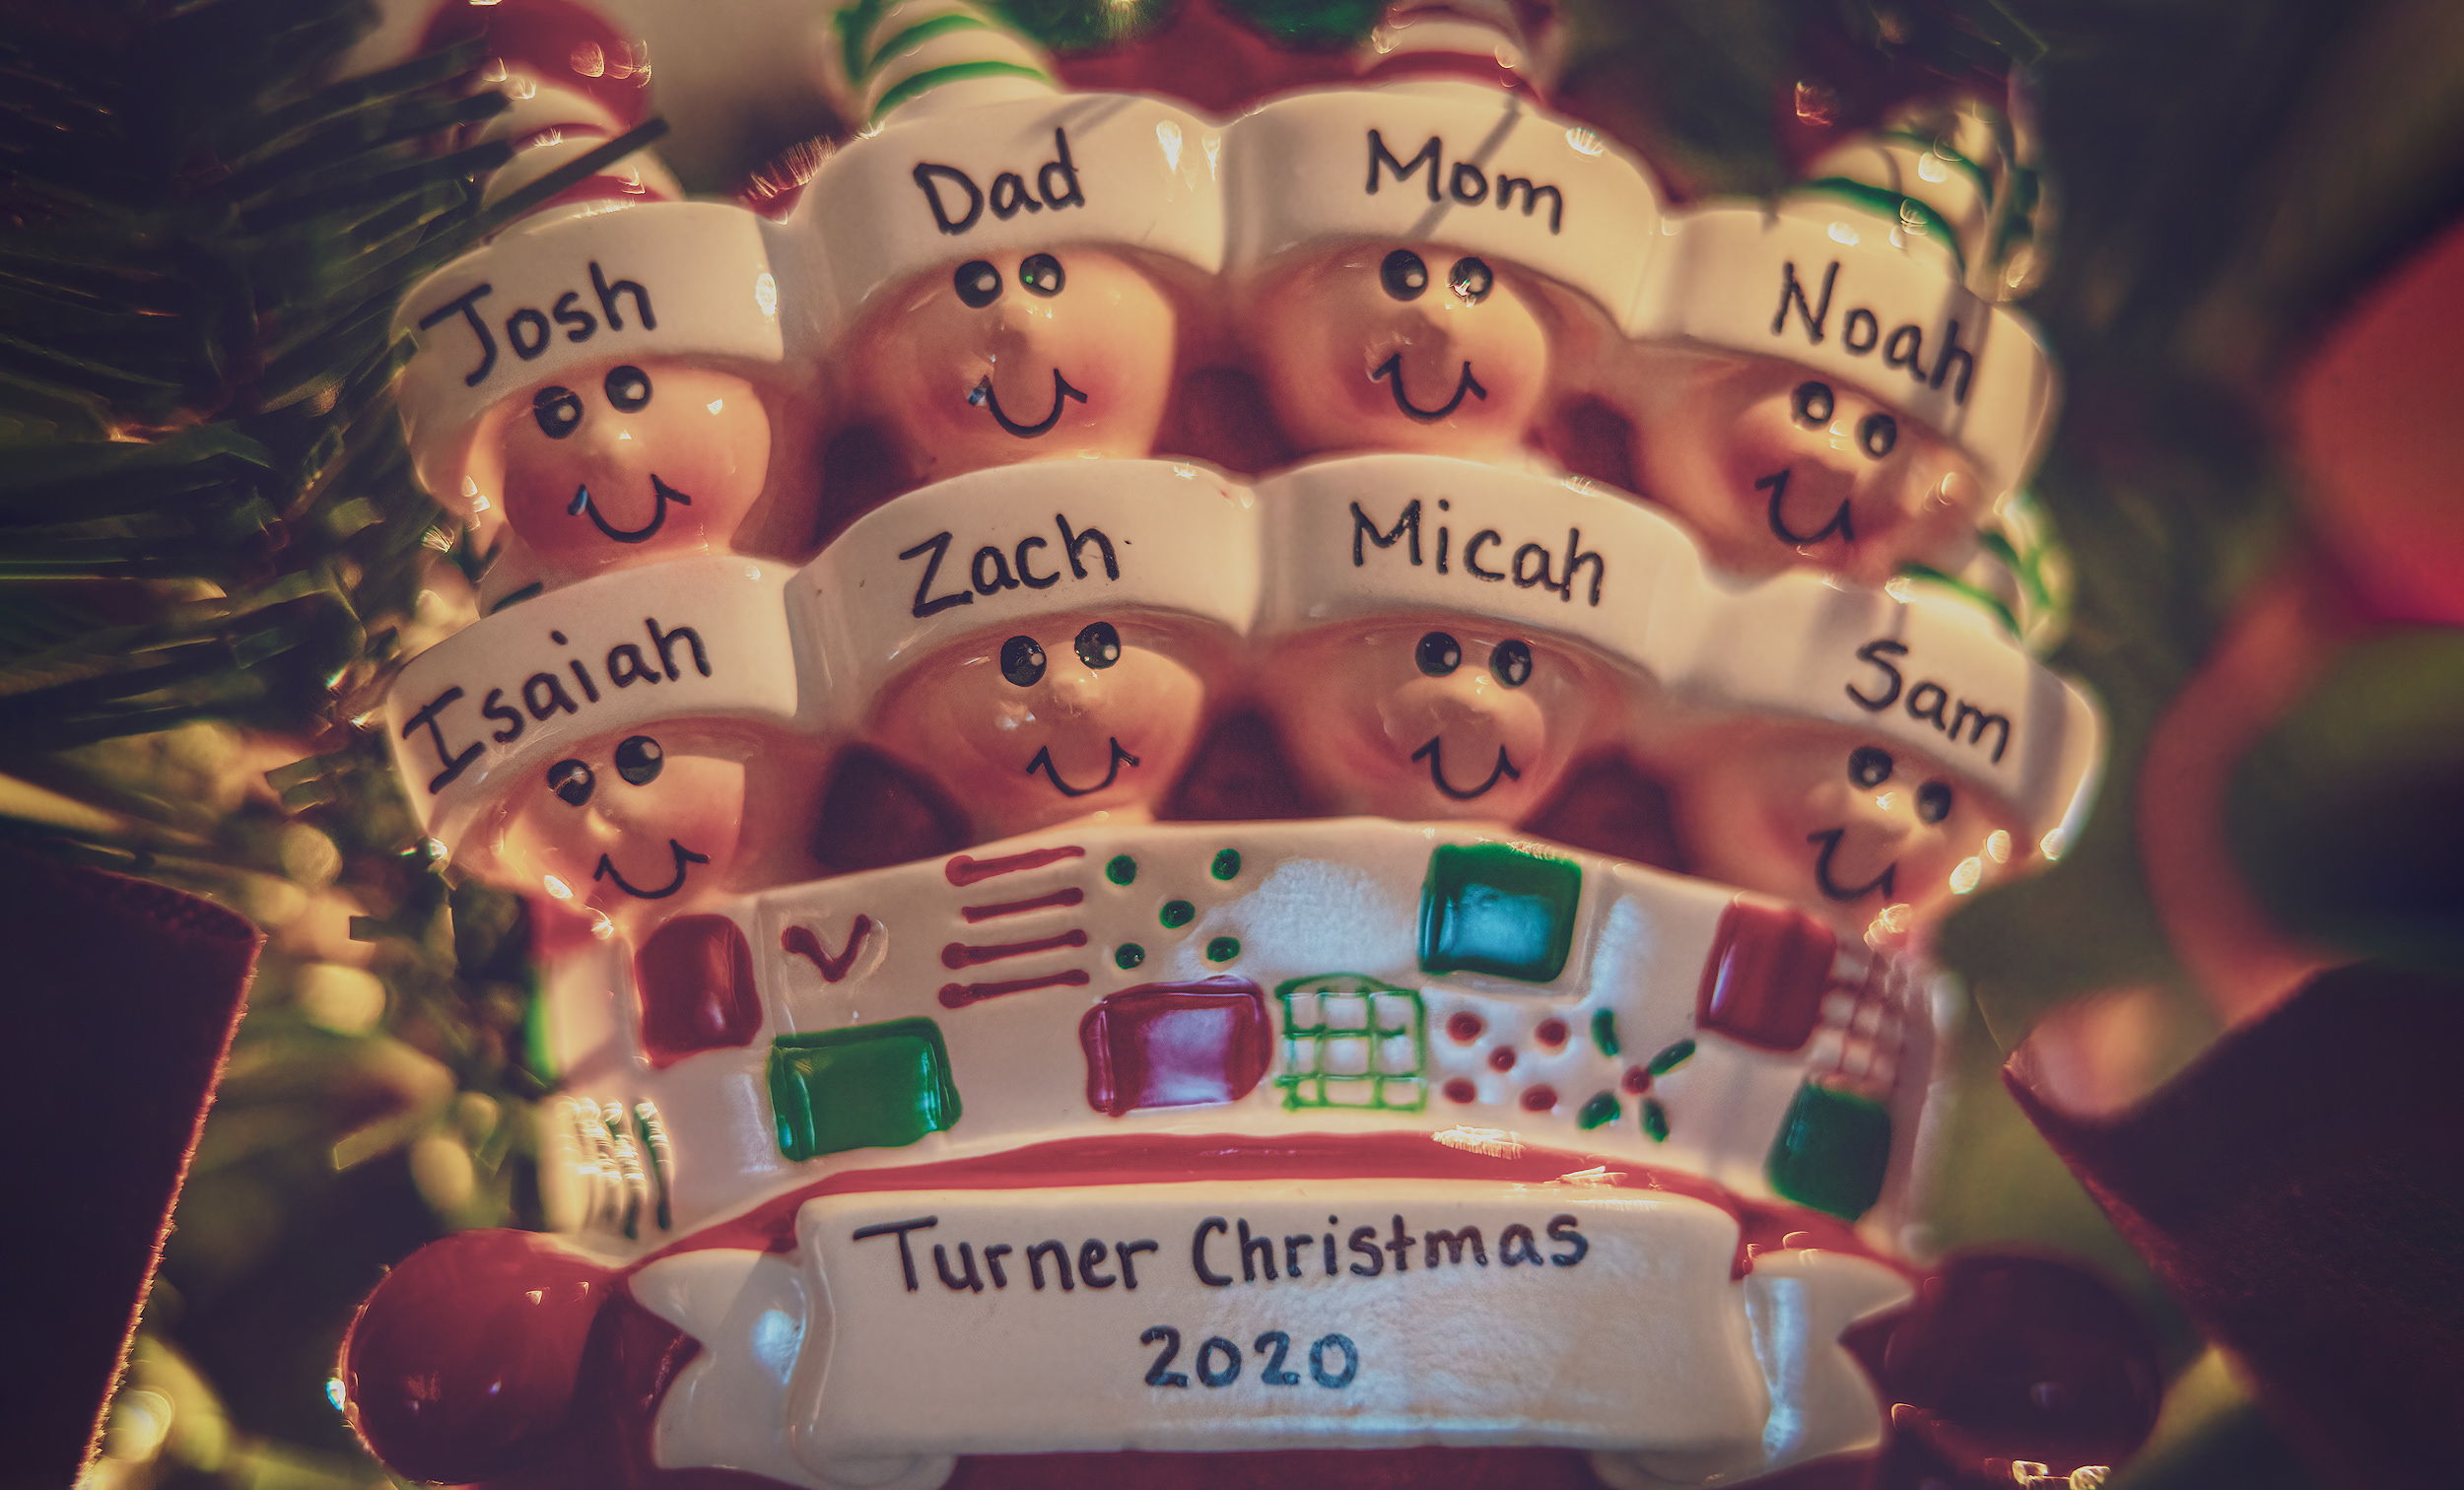 Christmas Macros 006 - Turner Family Ornament 2020